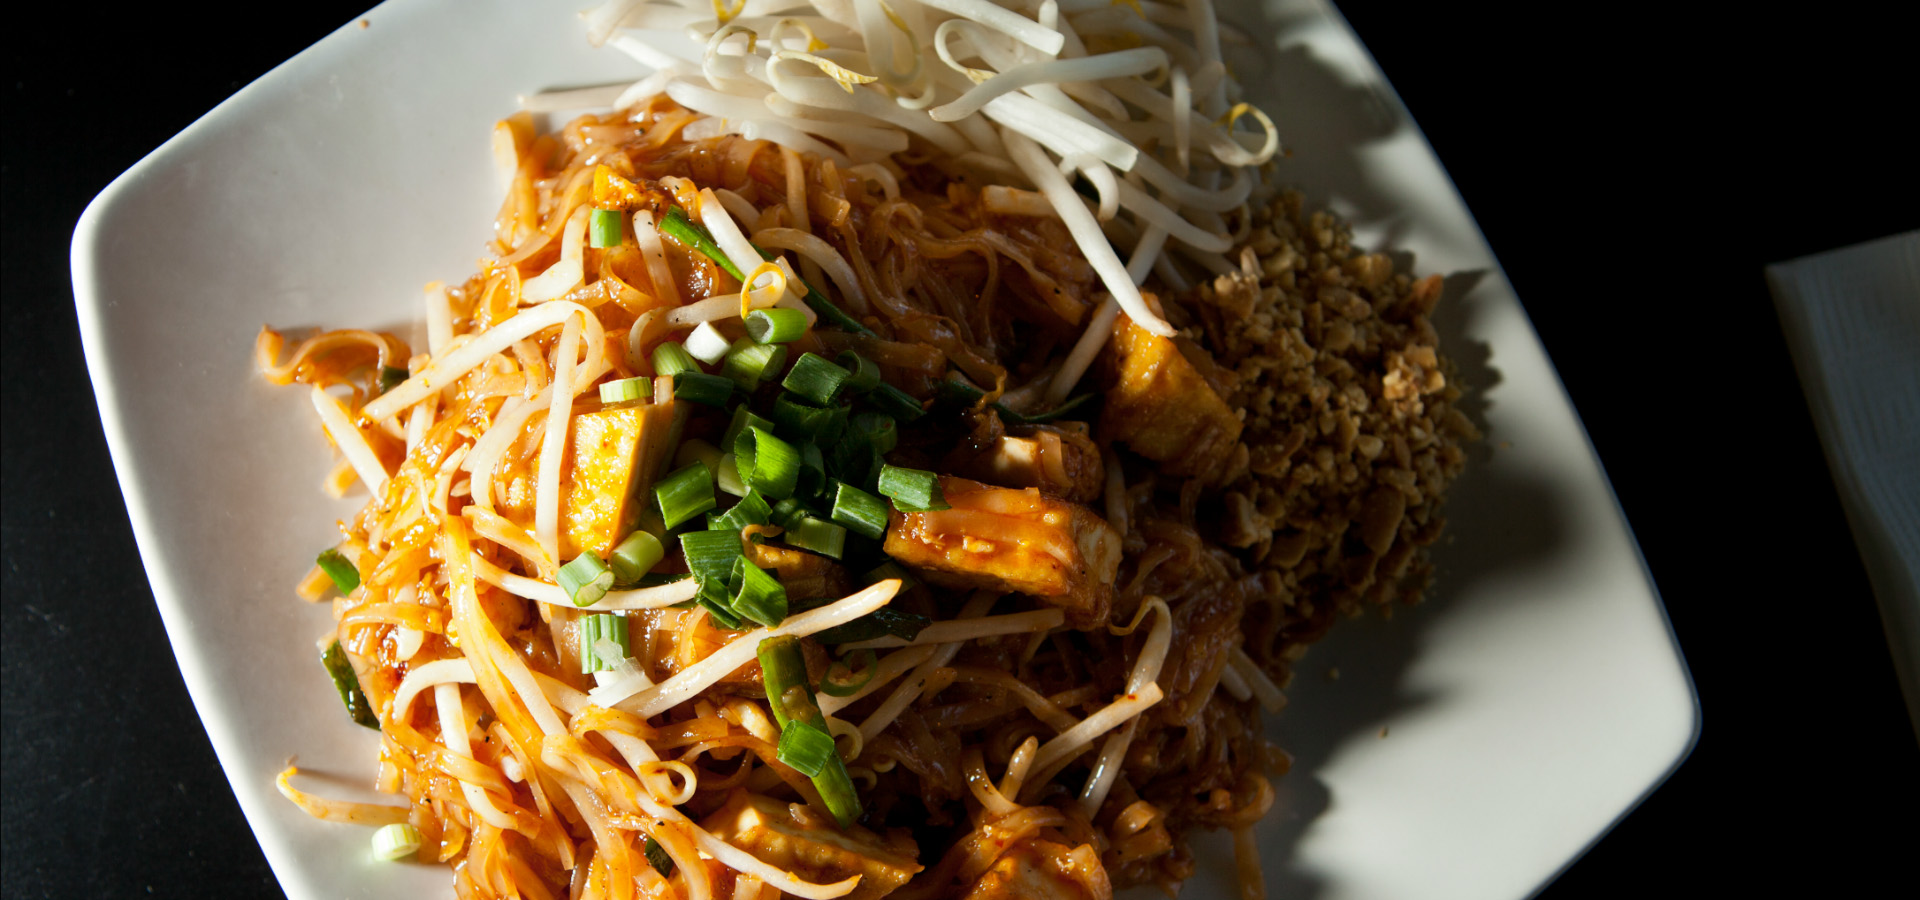 Image of Thai noodle dish